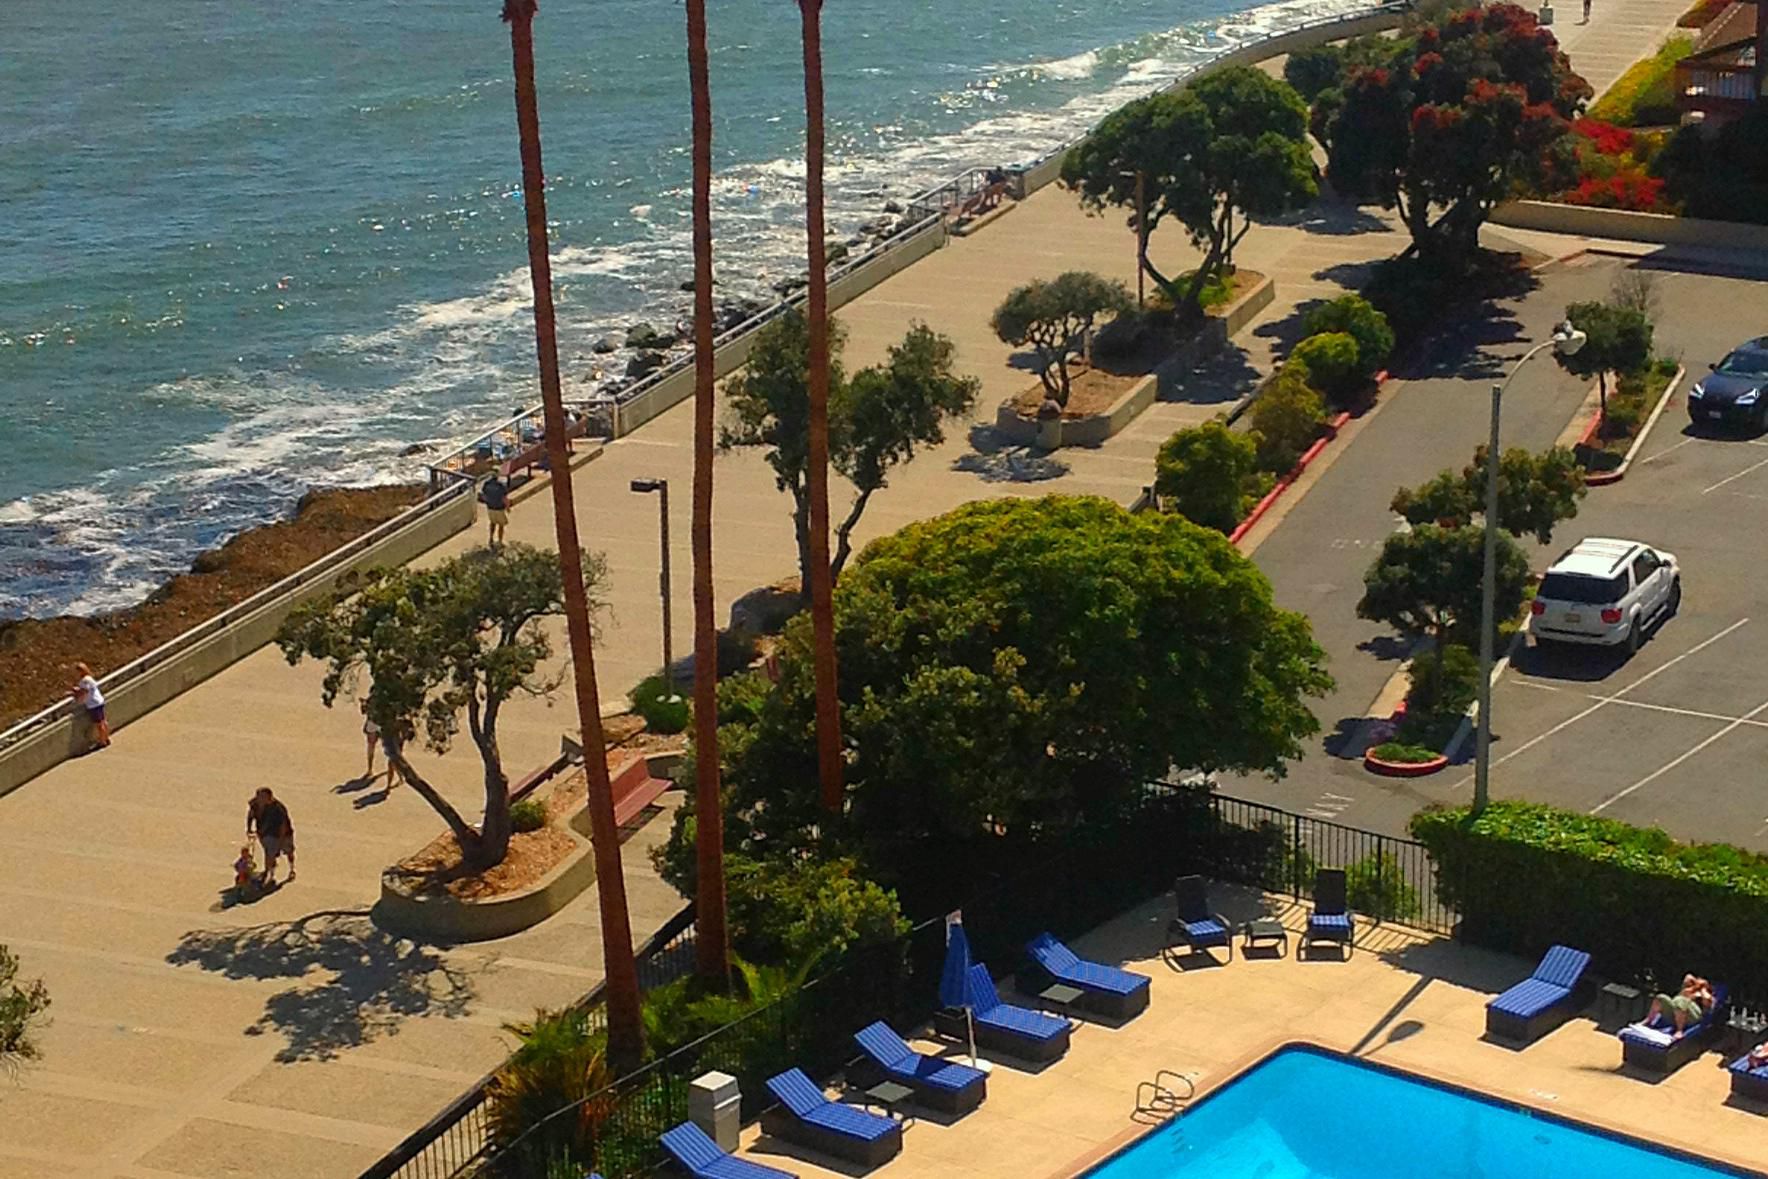 Crowne Plaza Ventura Beach Hotel Swimming Pool